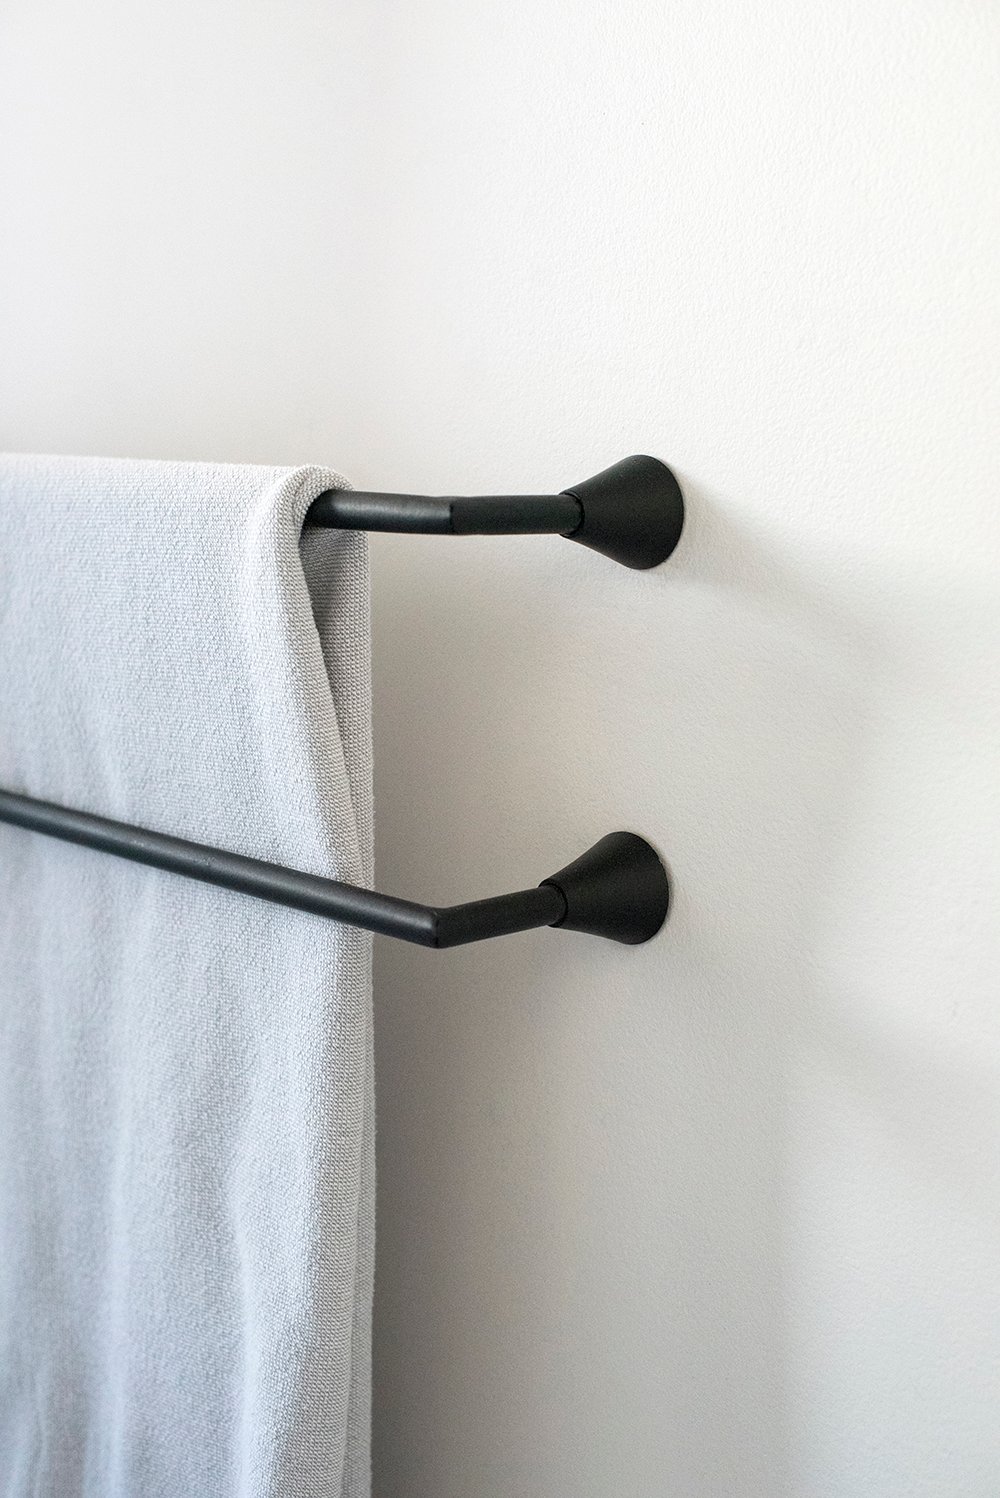 Black Towel Bars